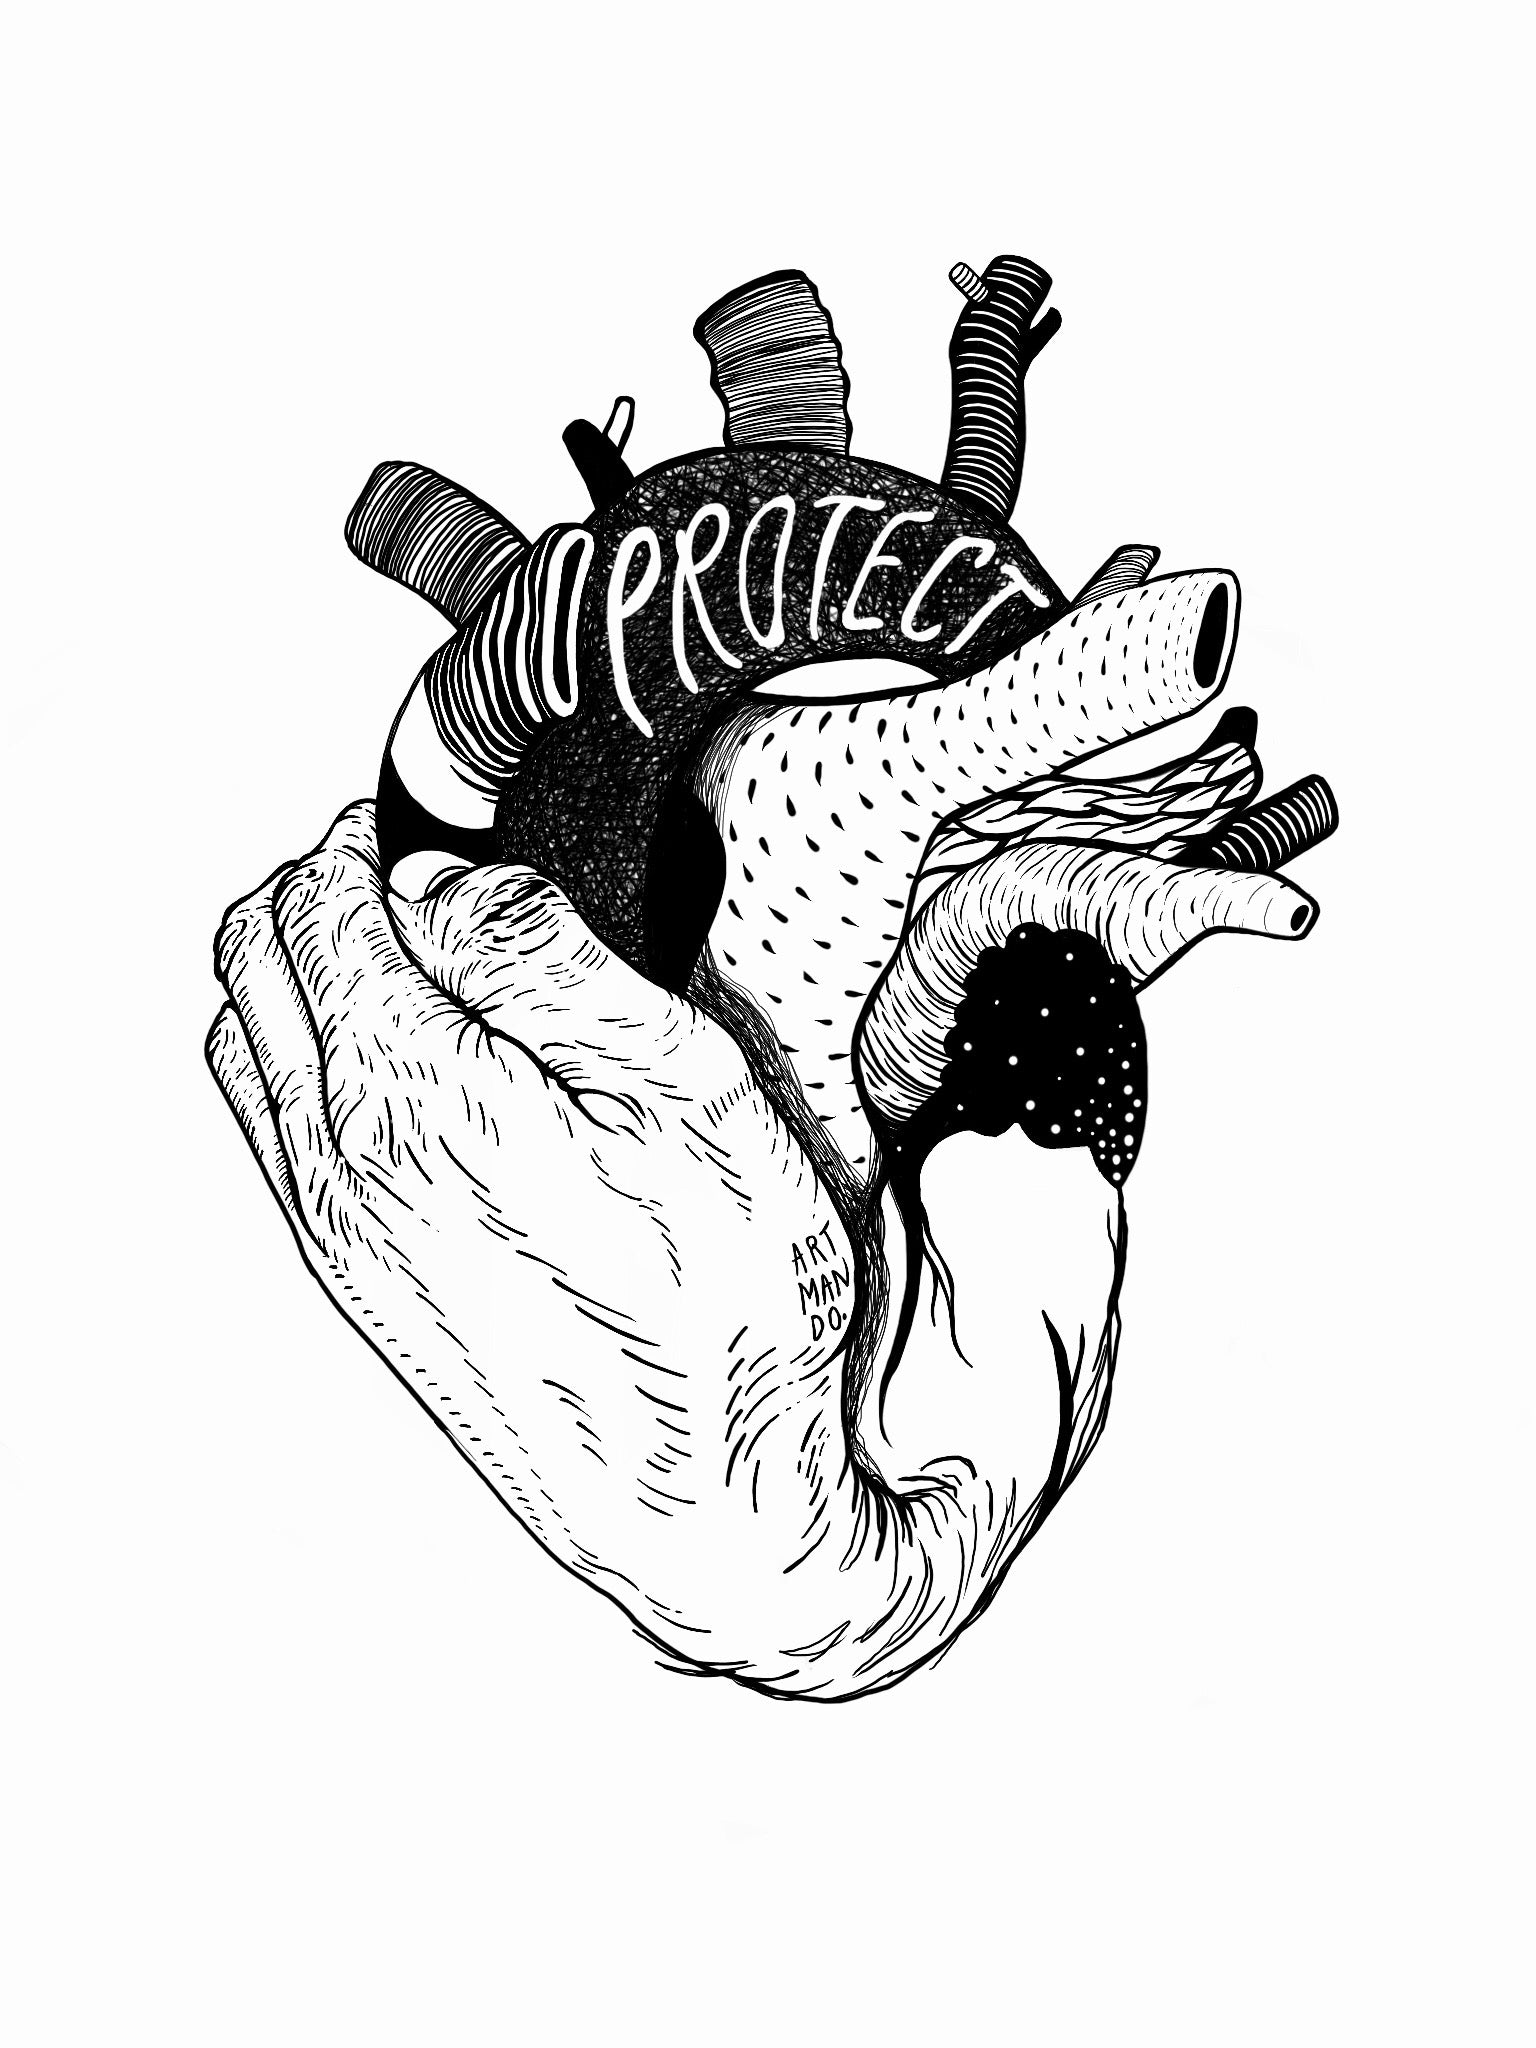 Protect Your Heart by Armando Silva